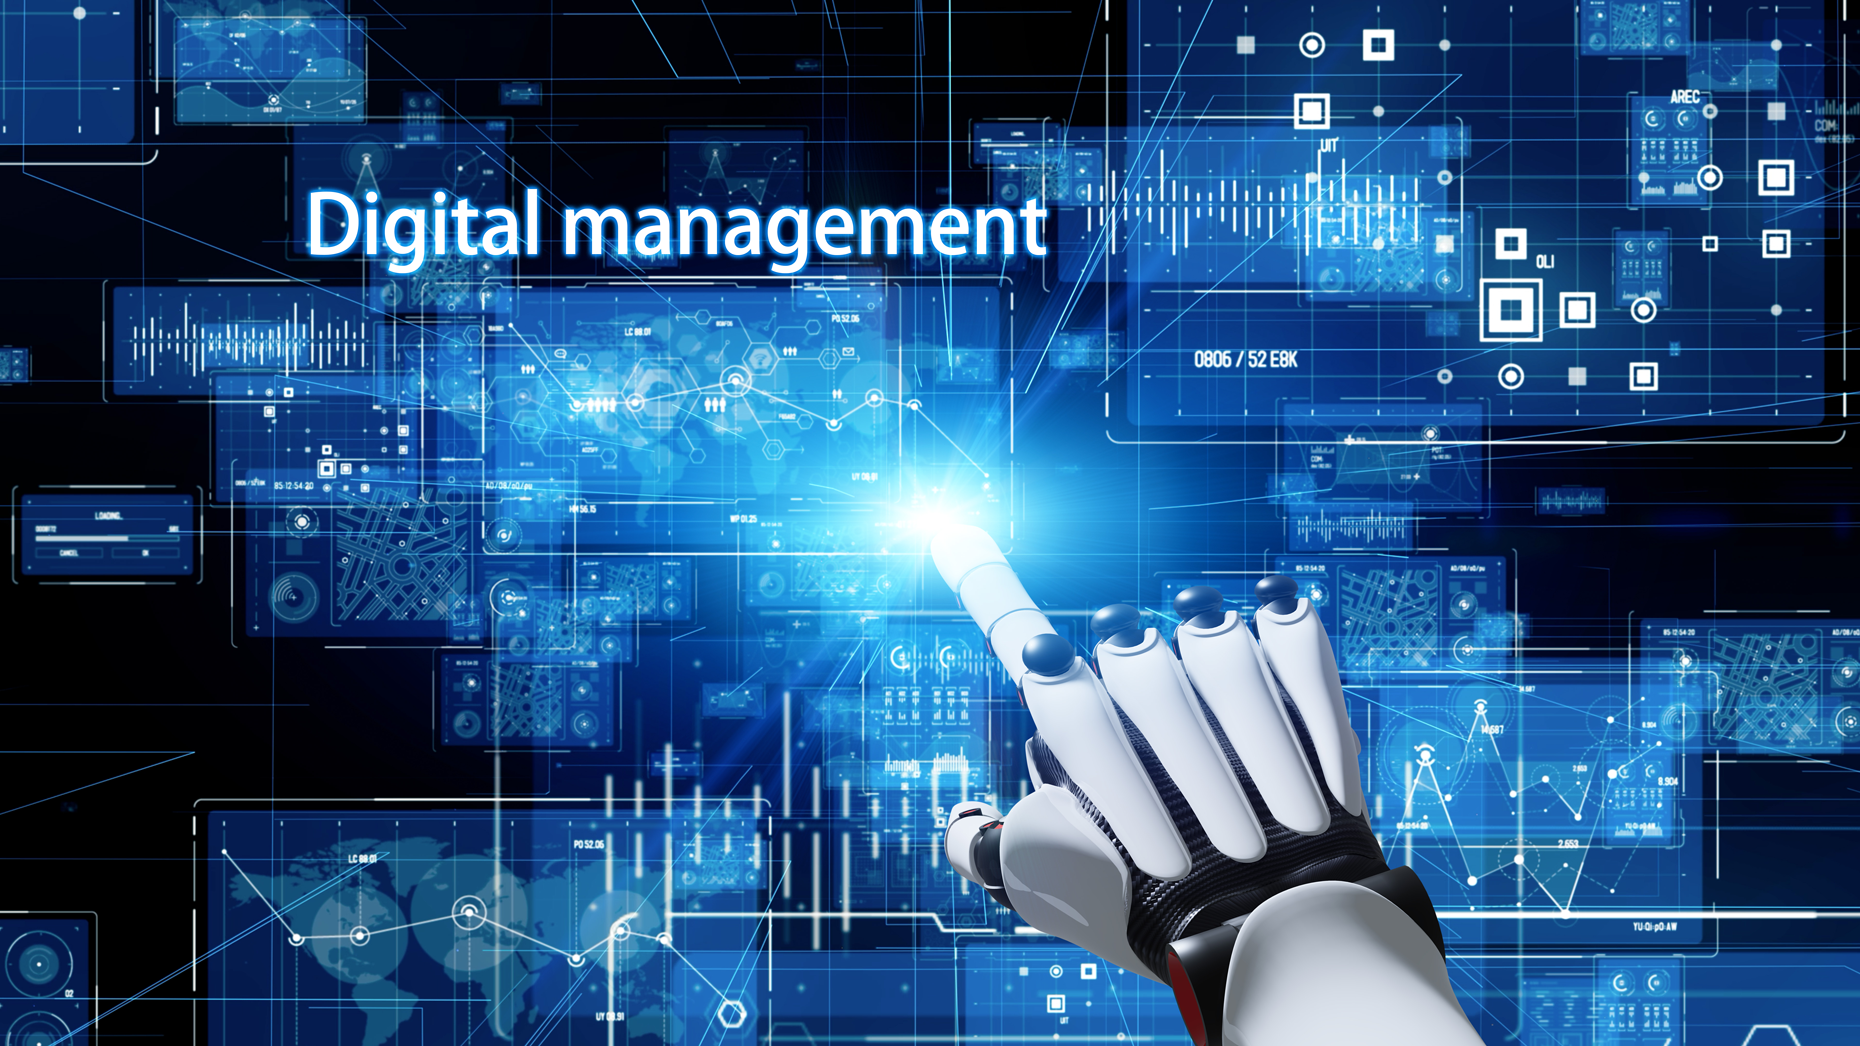 Digital management